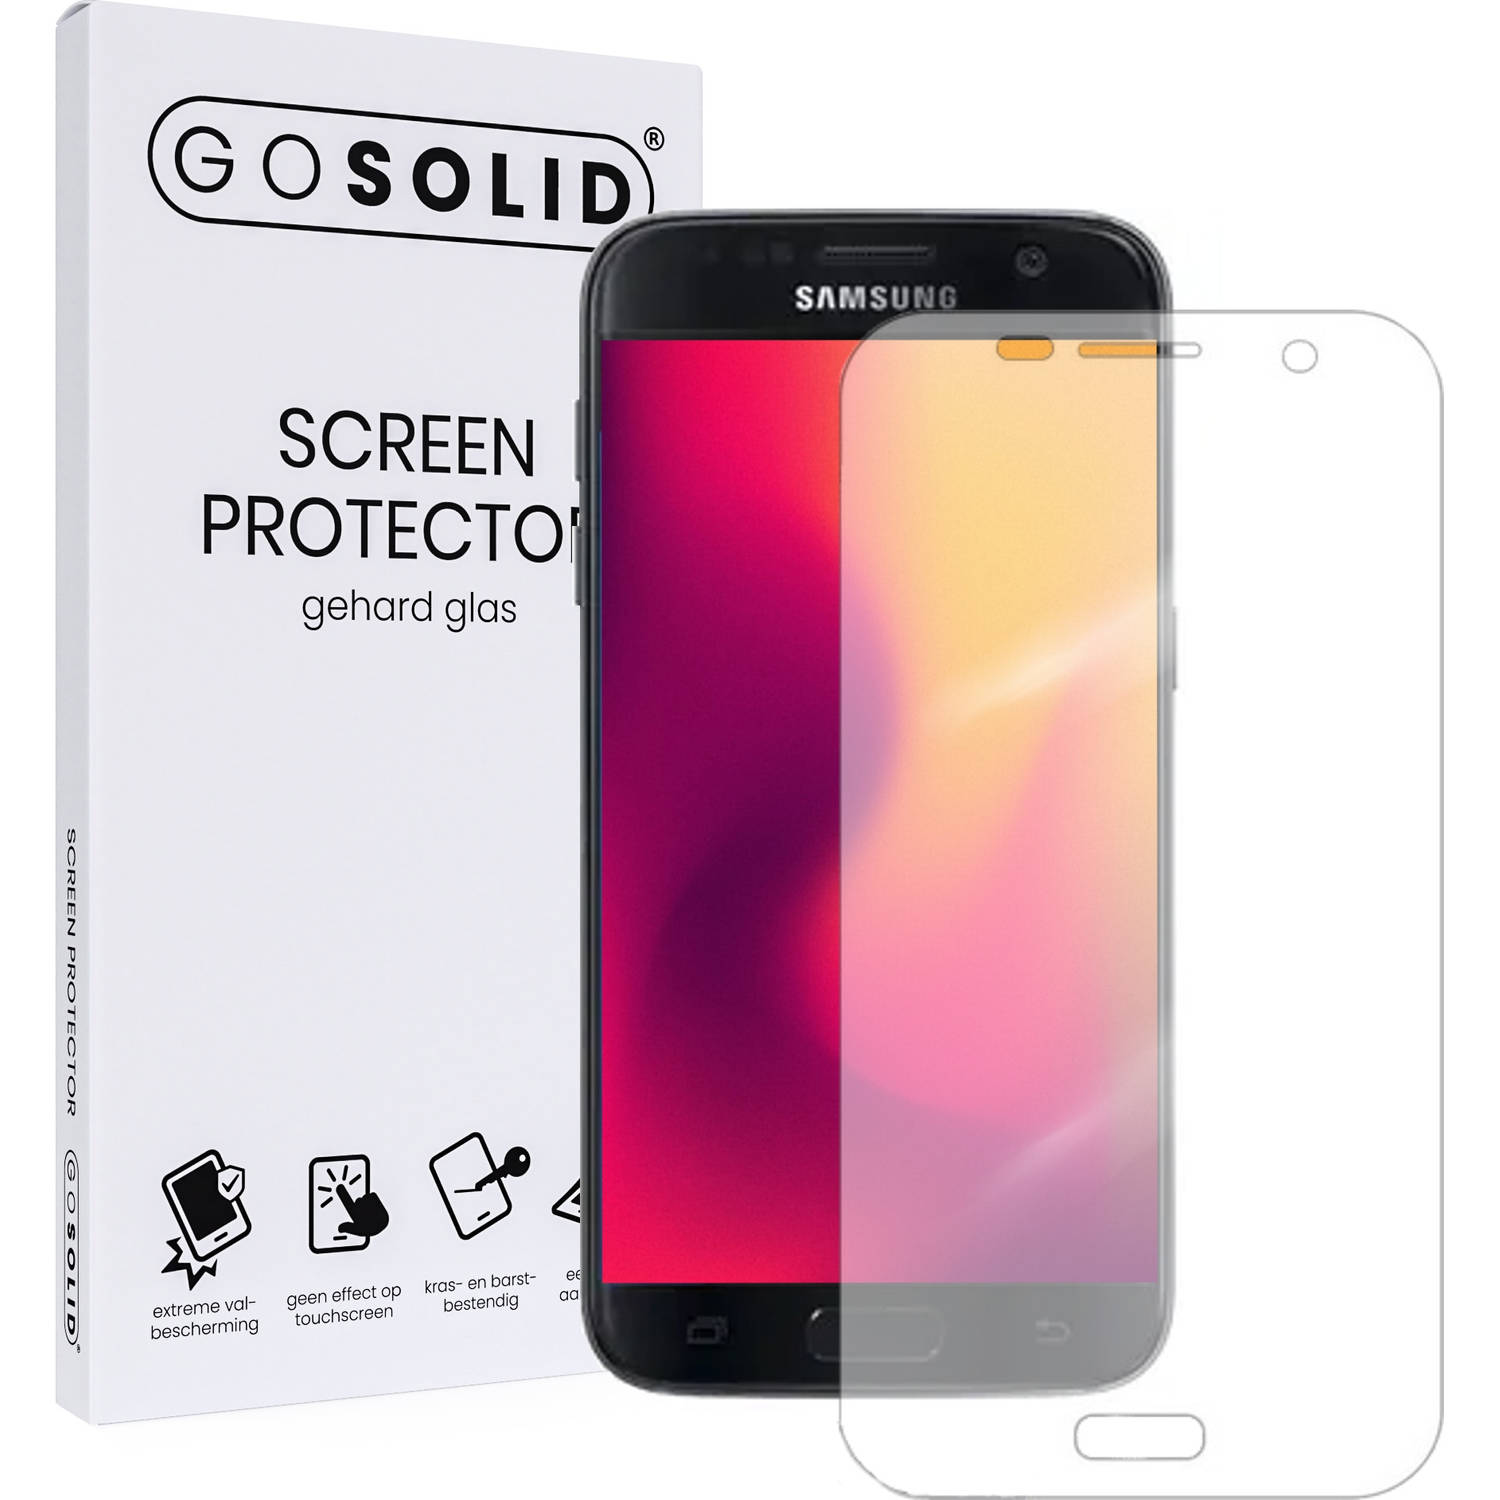 GO SOLID! Samsung Galaxy S4 Mini screenprotector gehard glas